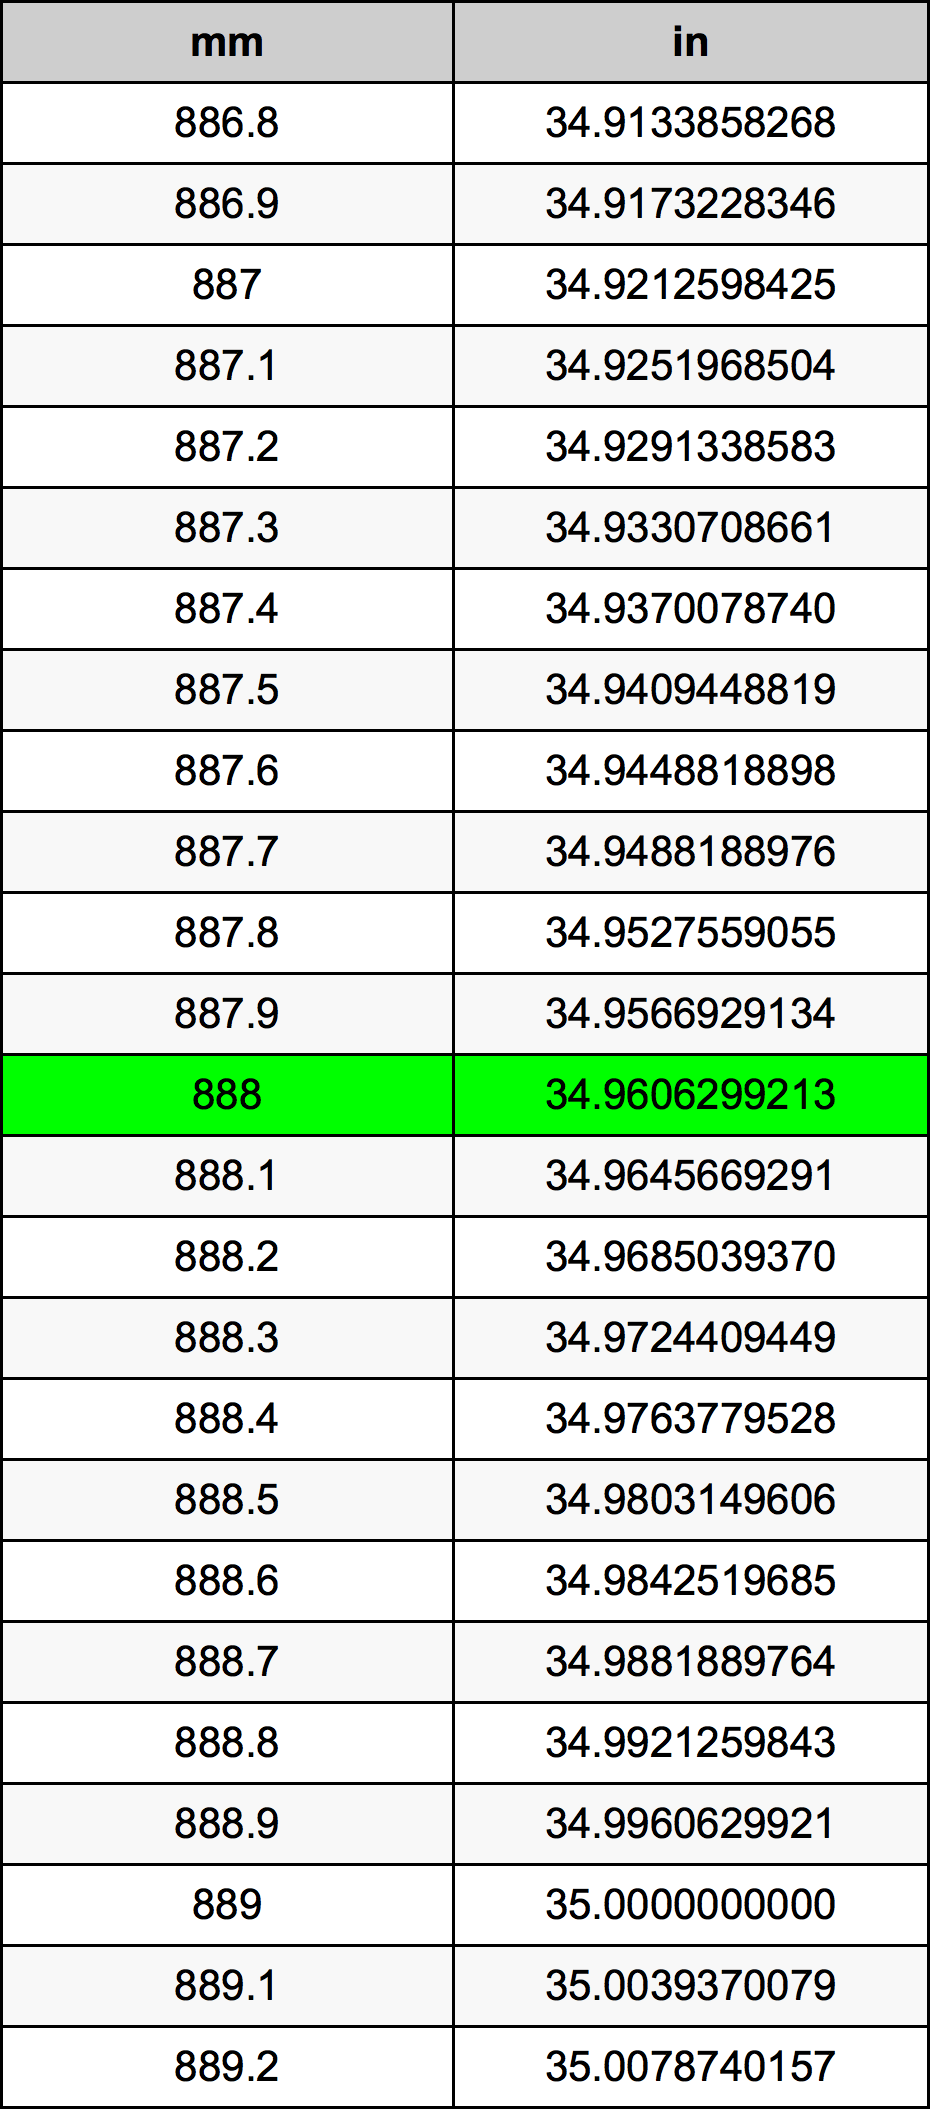 888 Millimetru konverżjoni tabella